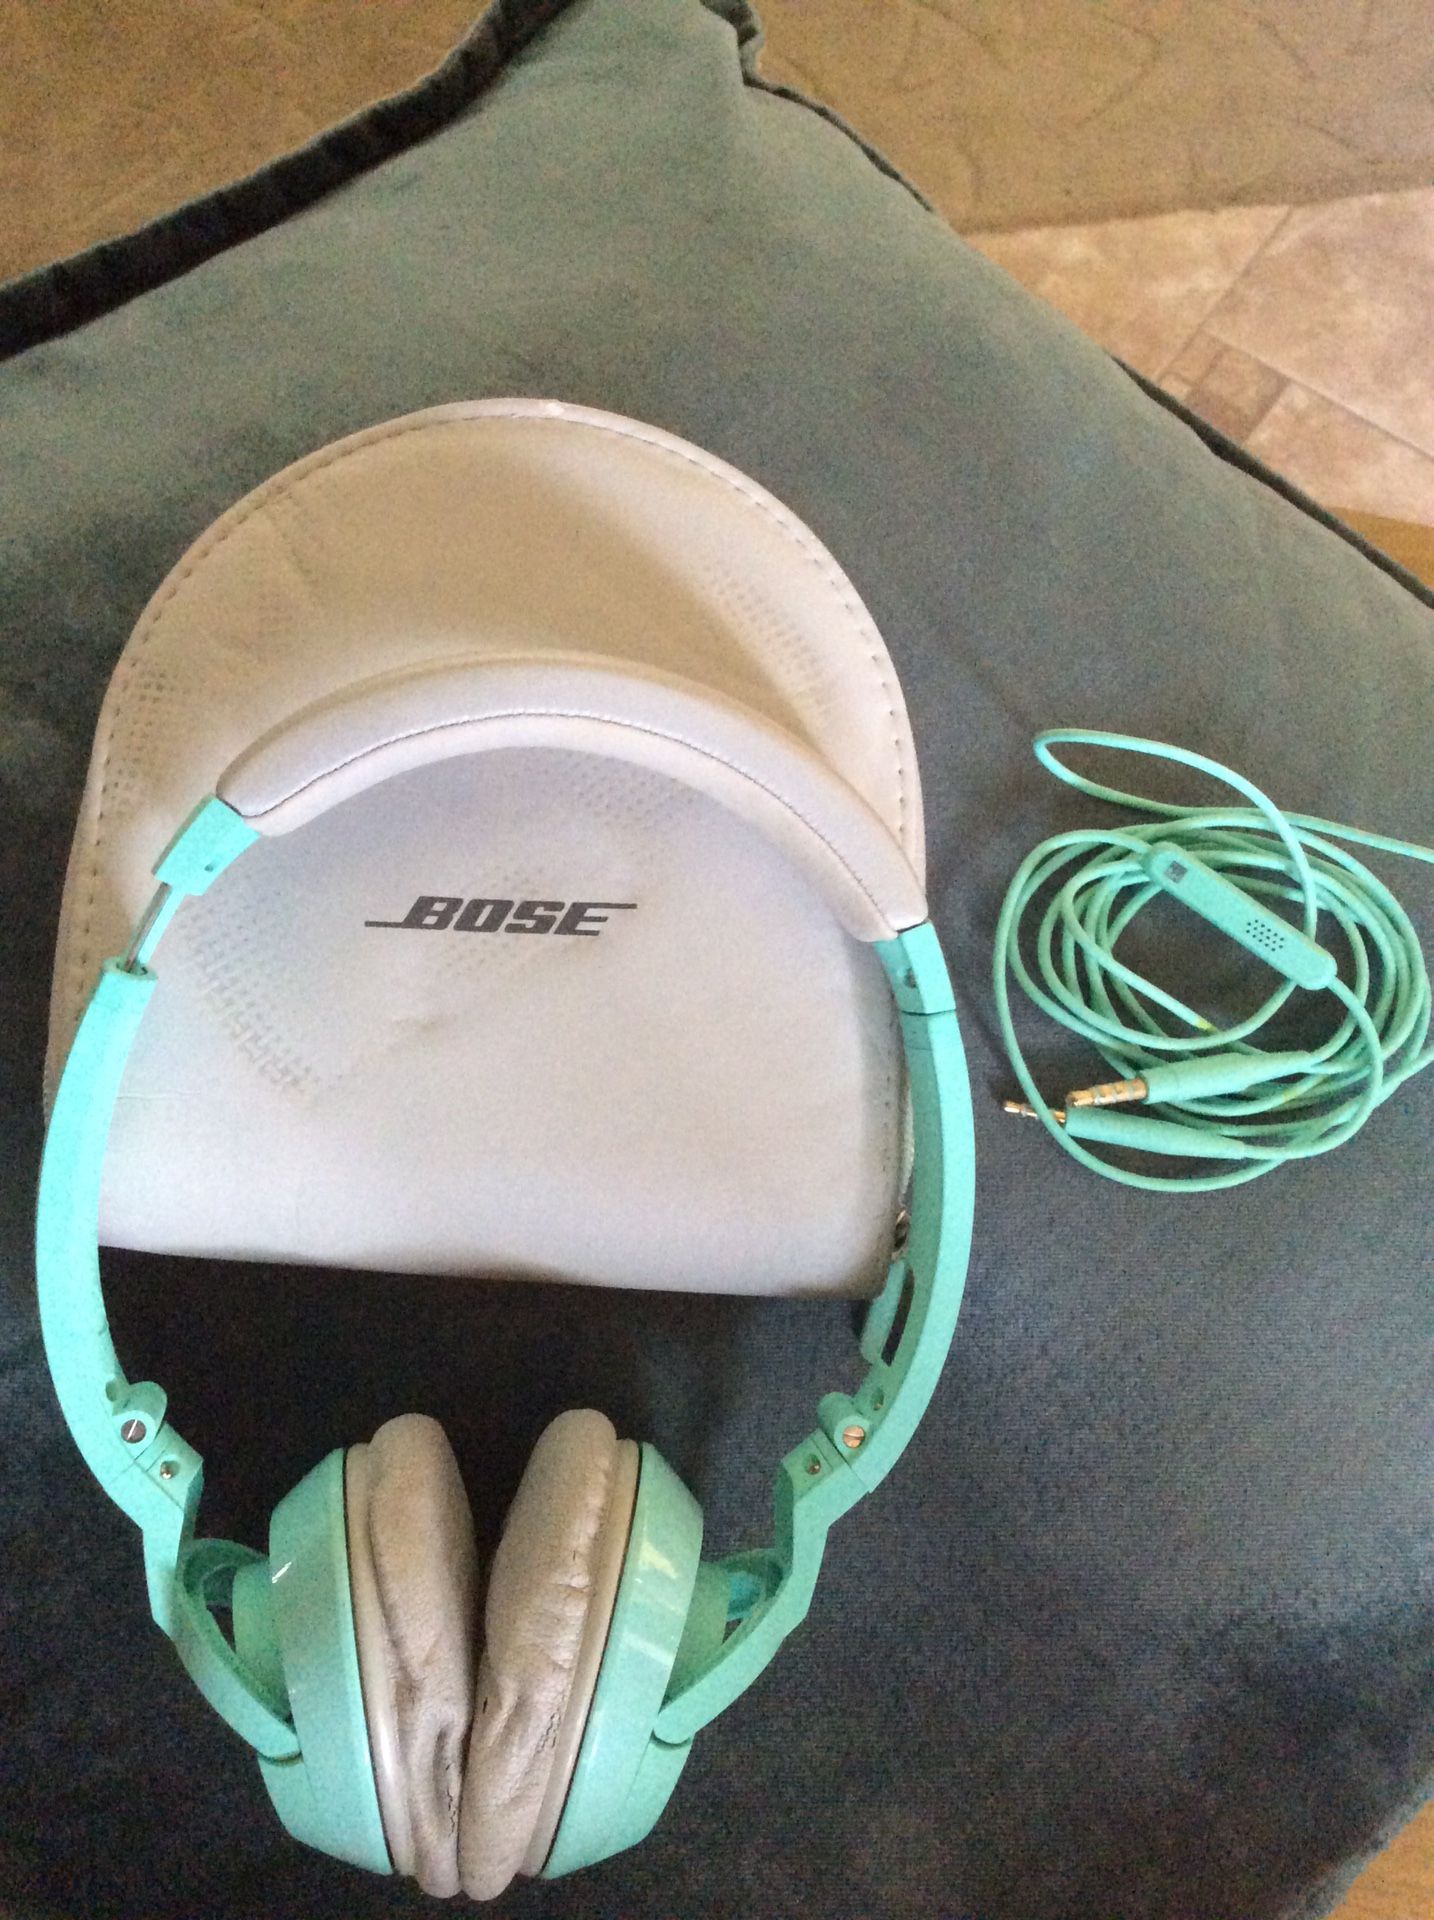 Bose sound true headphones